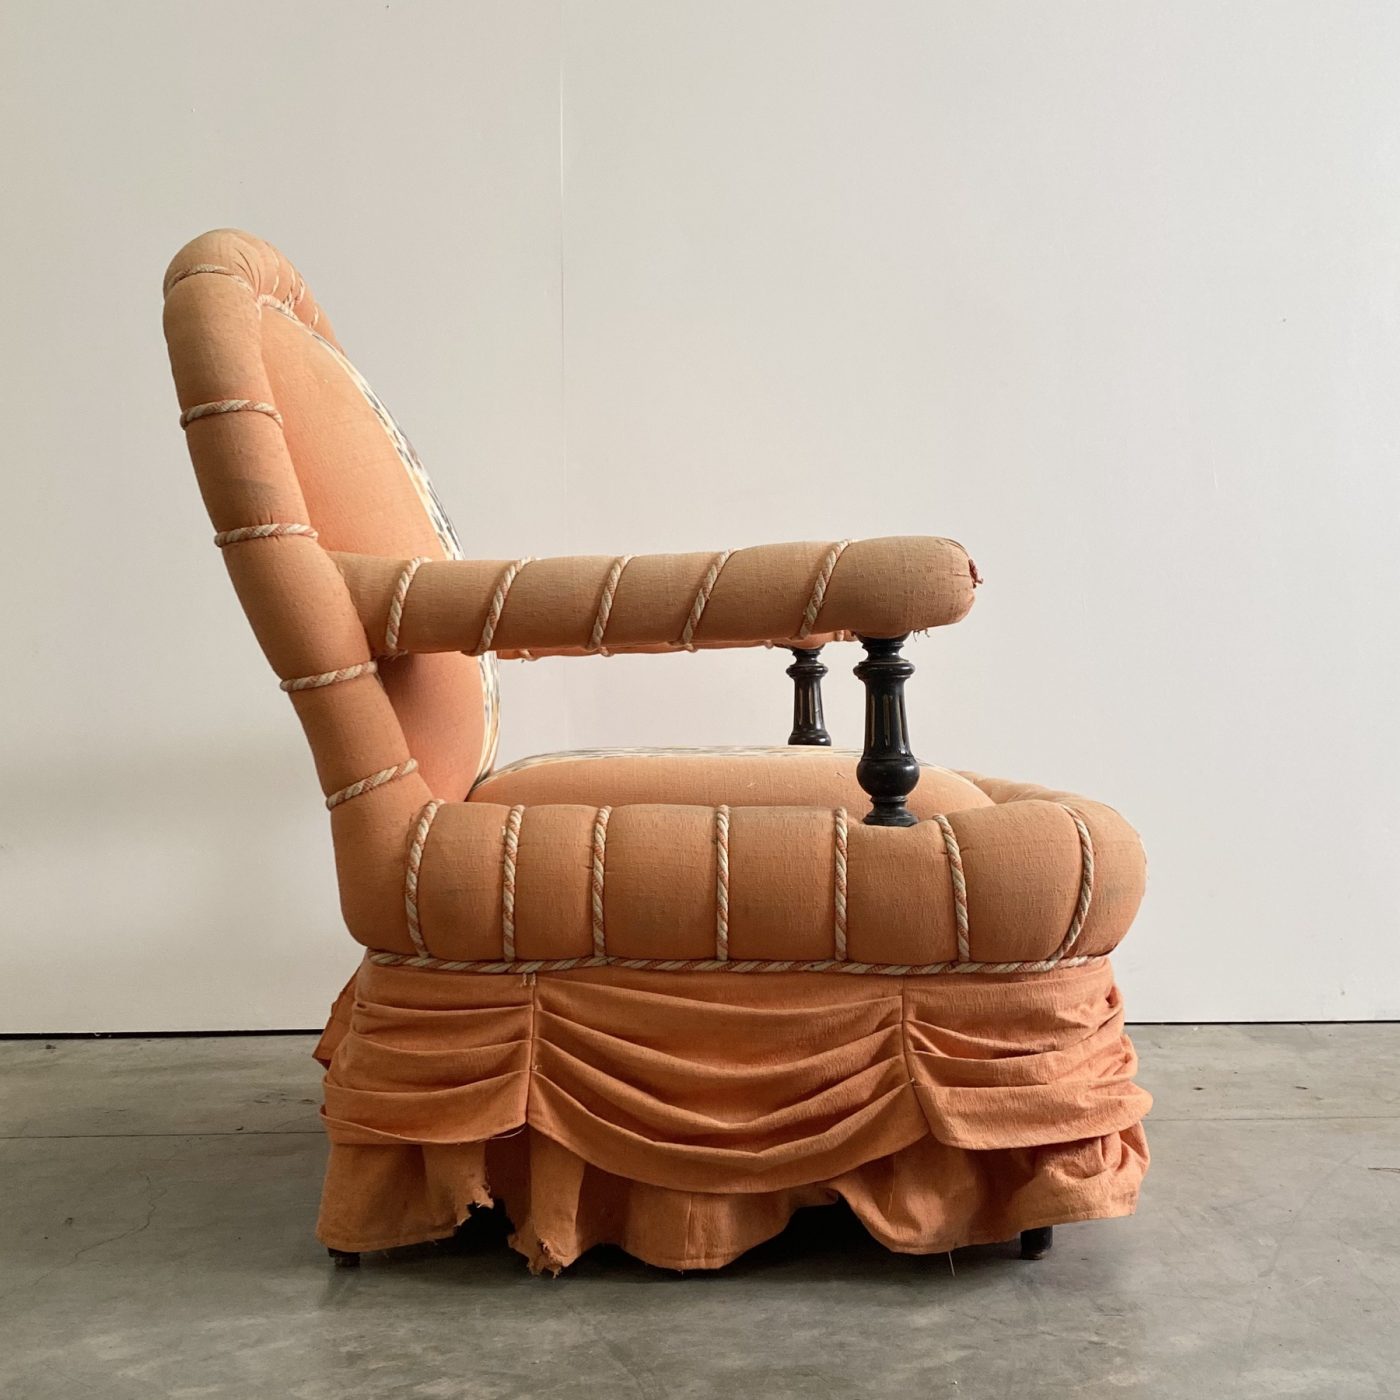 objet-vagabond-napoleon3-armchair0004